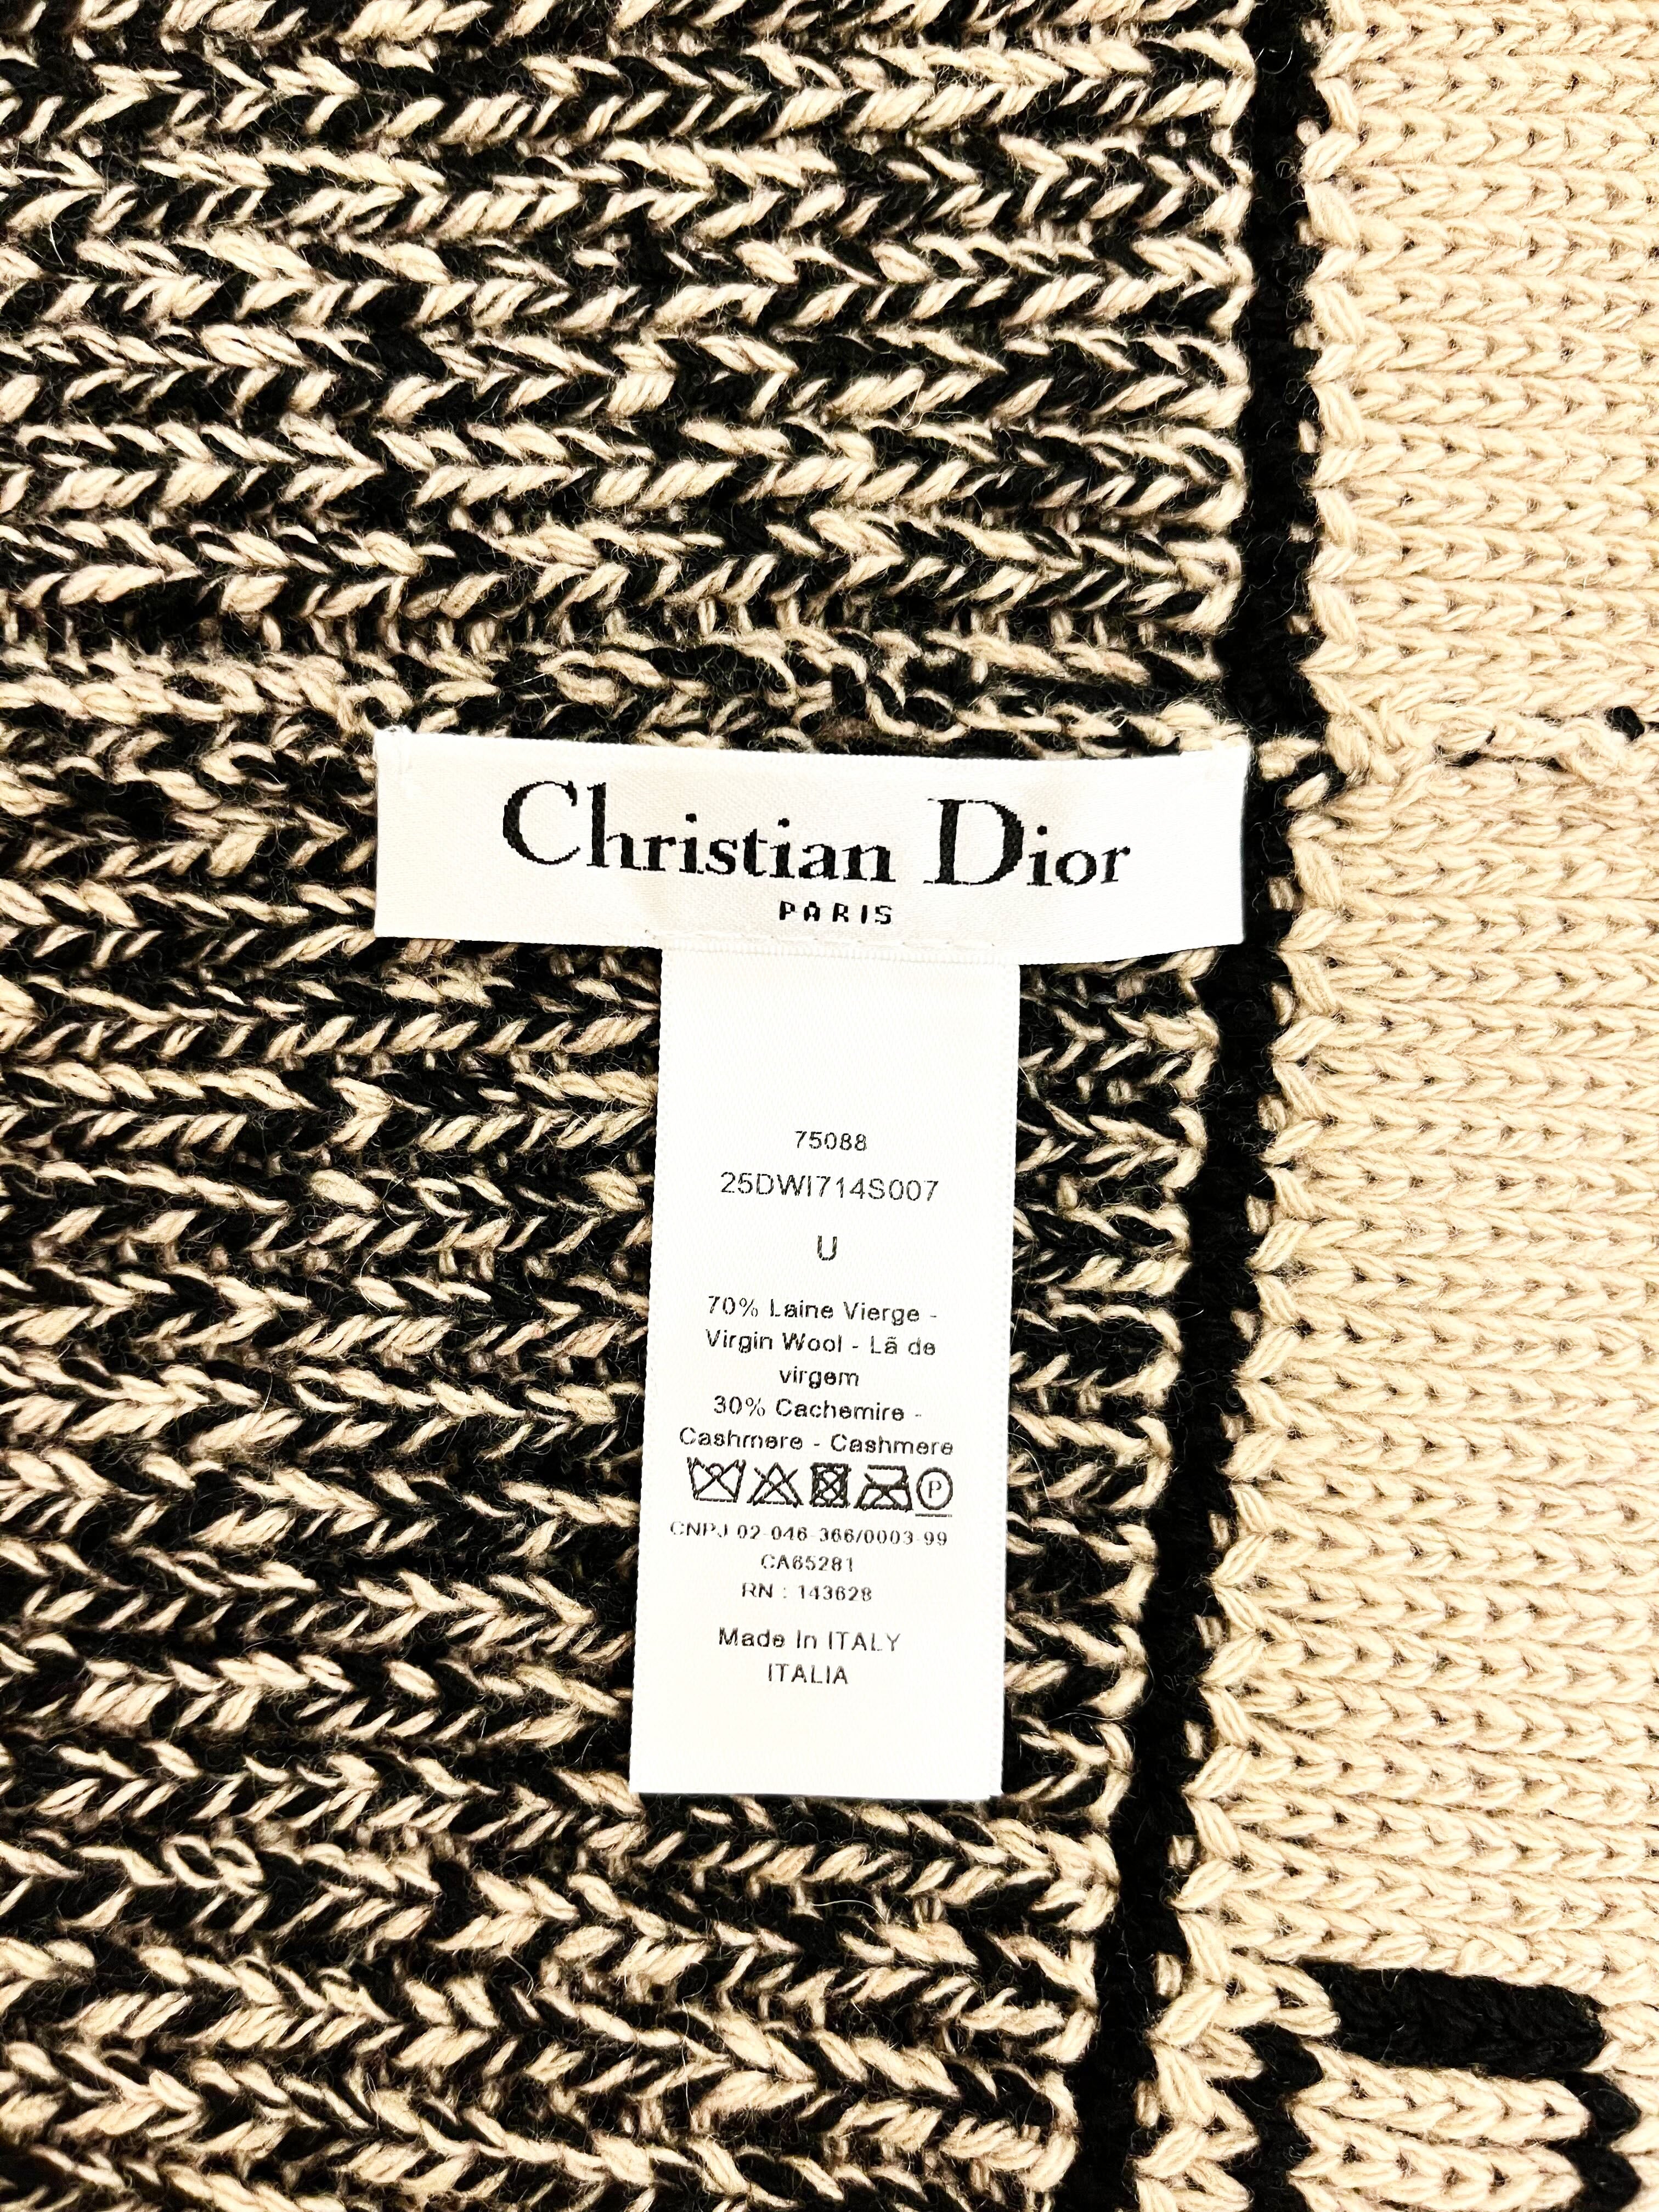 Christian Dior 2020s Black and Beige Beanie Hat